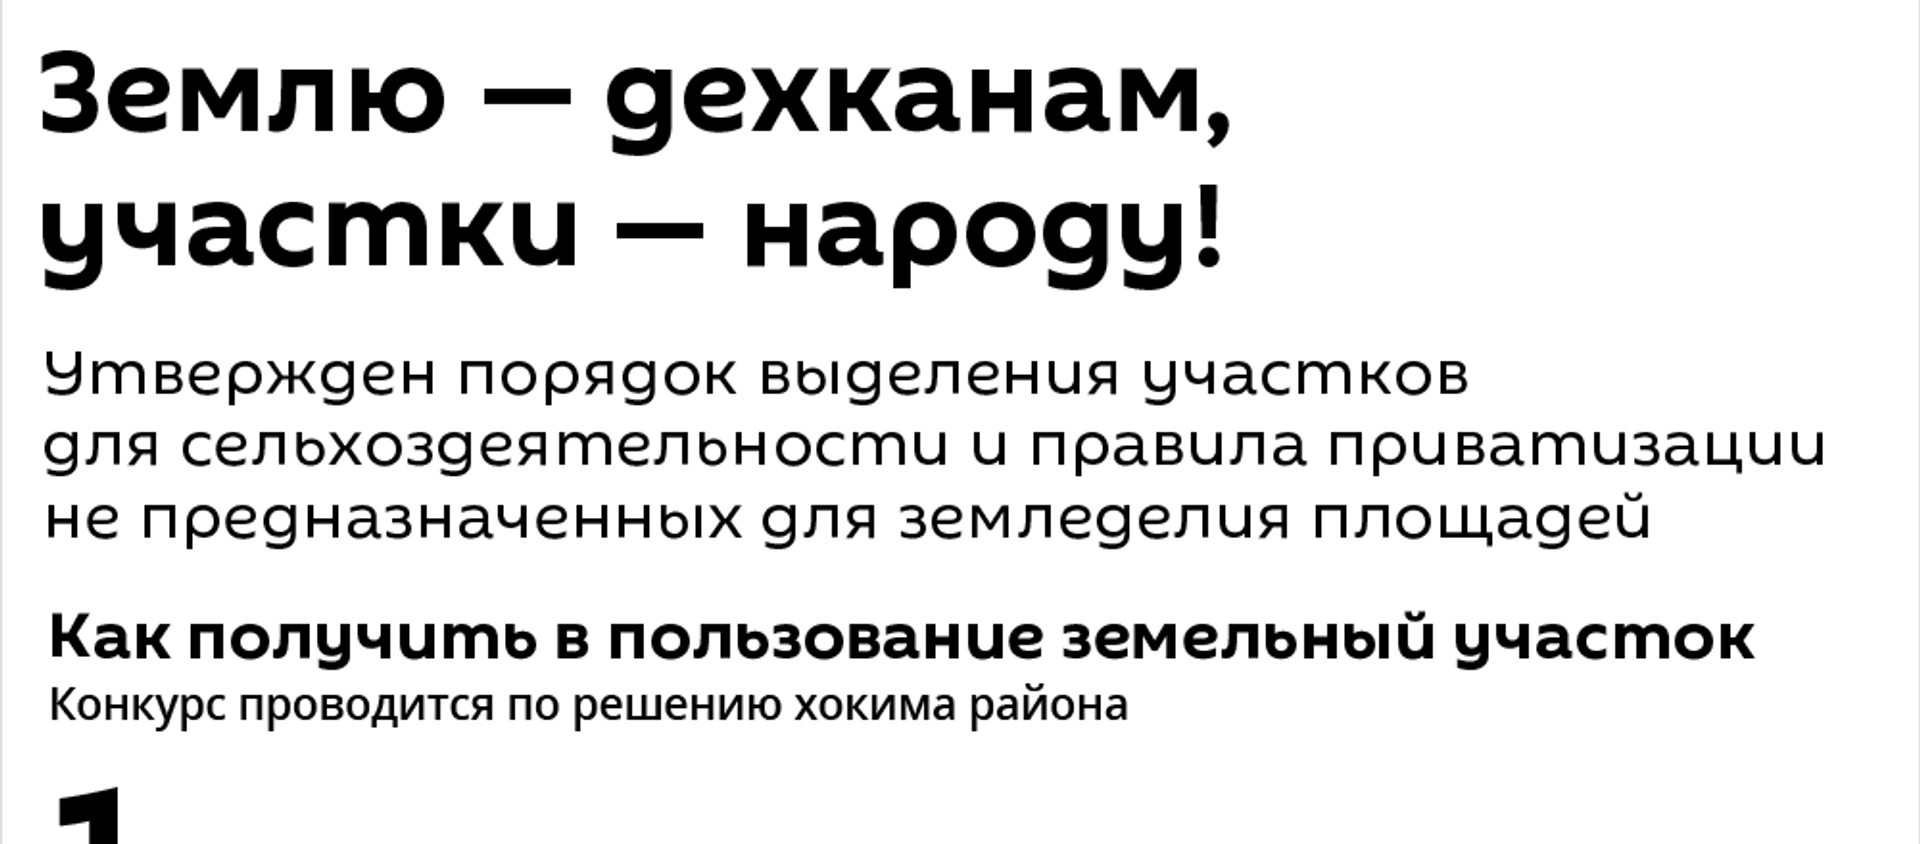 Землю - дехканам, участки - народу! - Sputnik Узбекистан, 1920, 16.08.2019